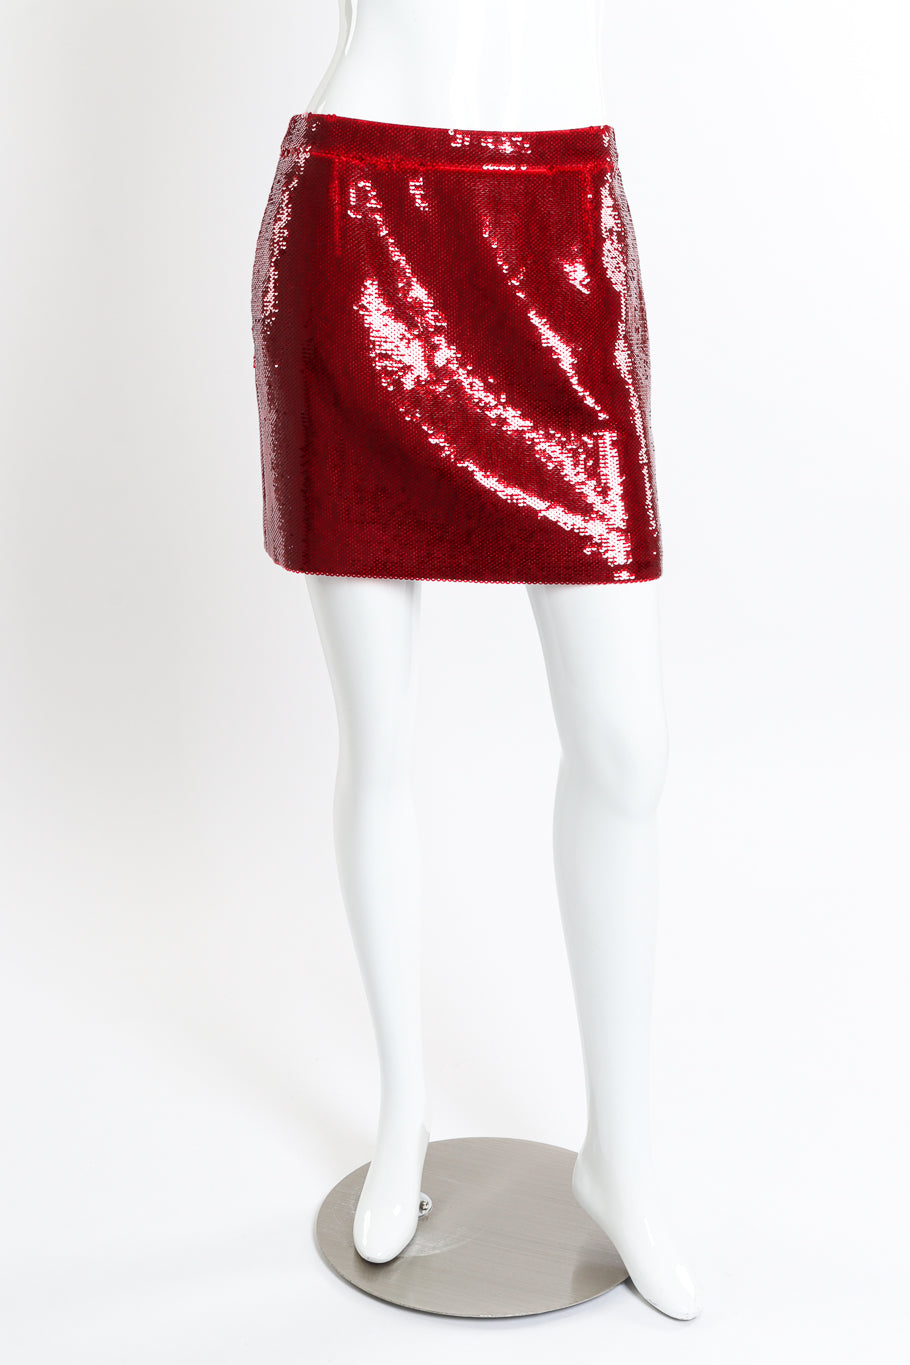 Saint Laurent Sequin Mini Skirt front on mannequin @recessla